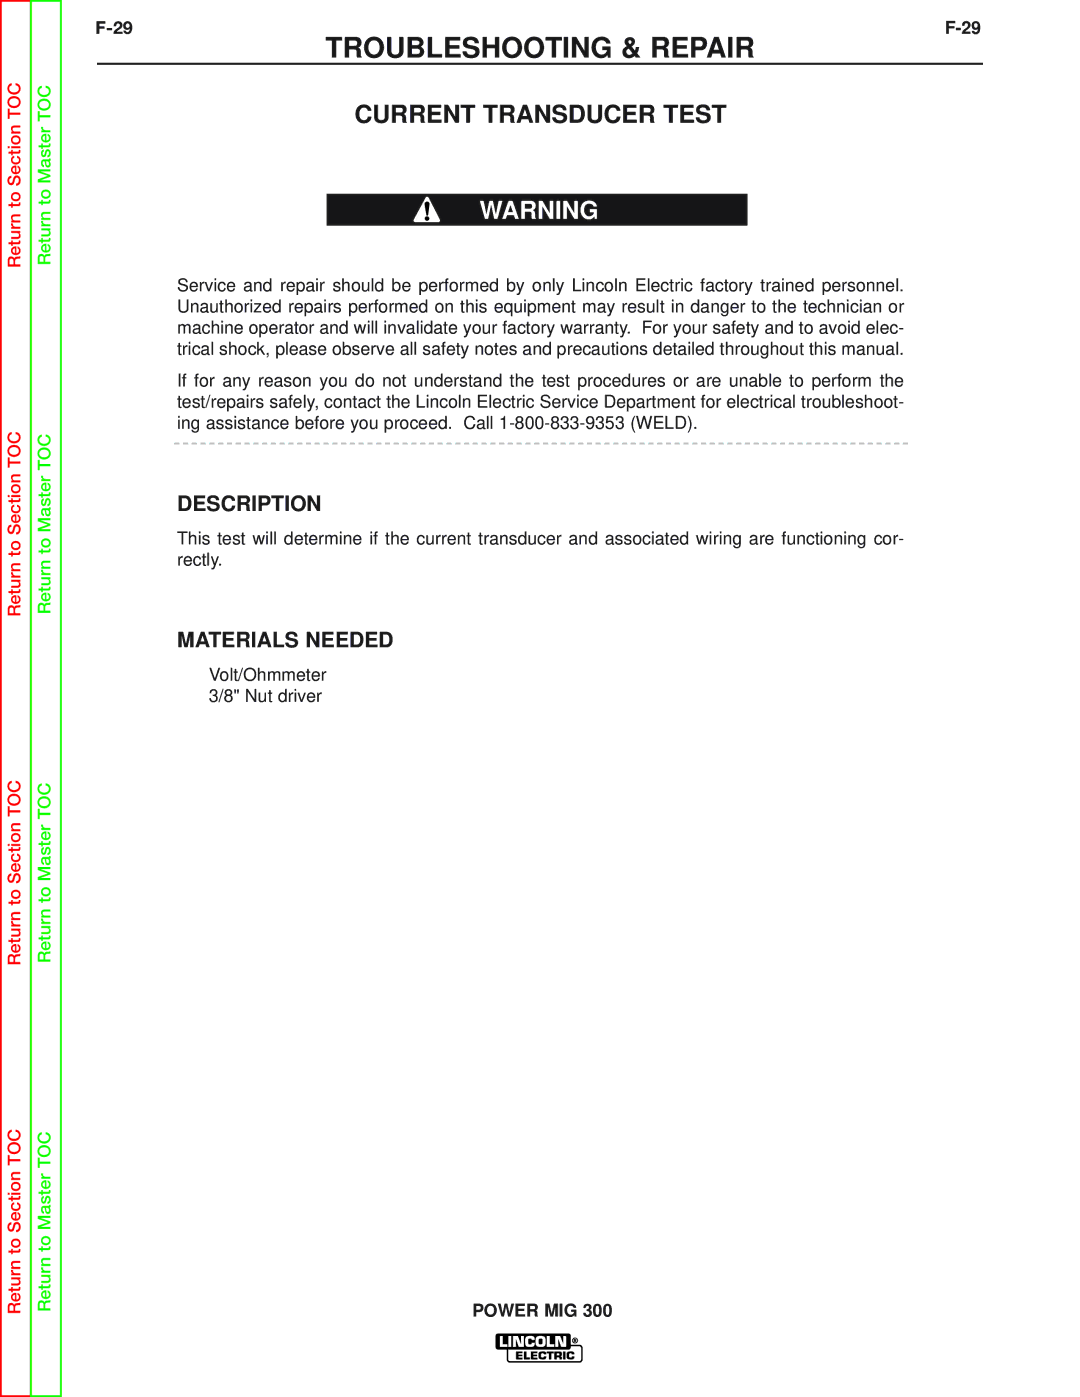 Lincoln Electric SVM160-B service manual Current Transducer Test, Description 